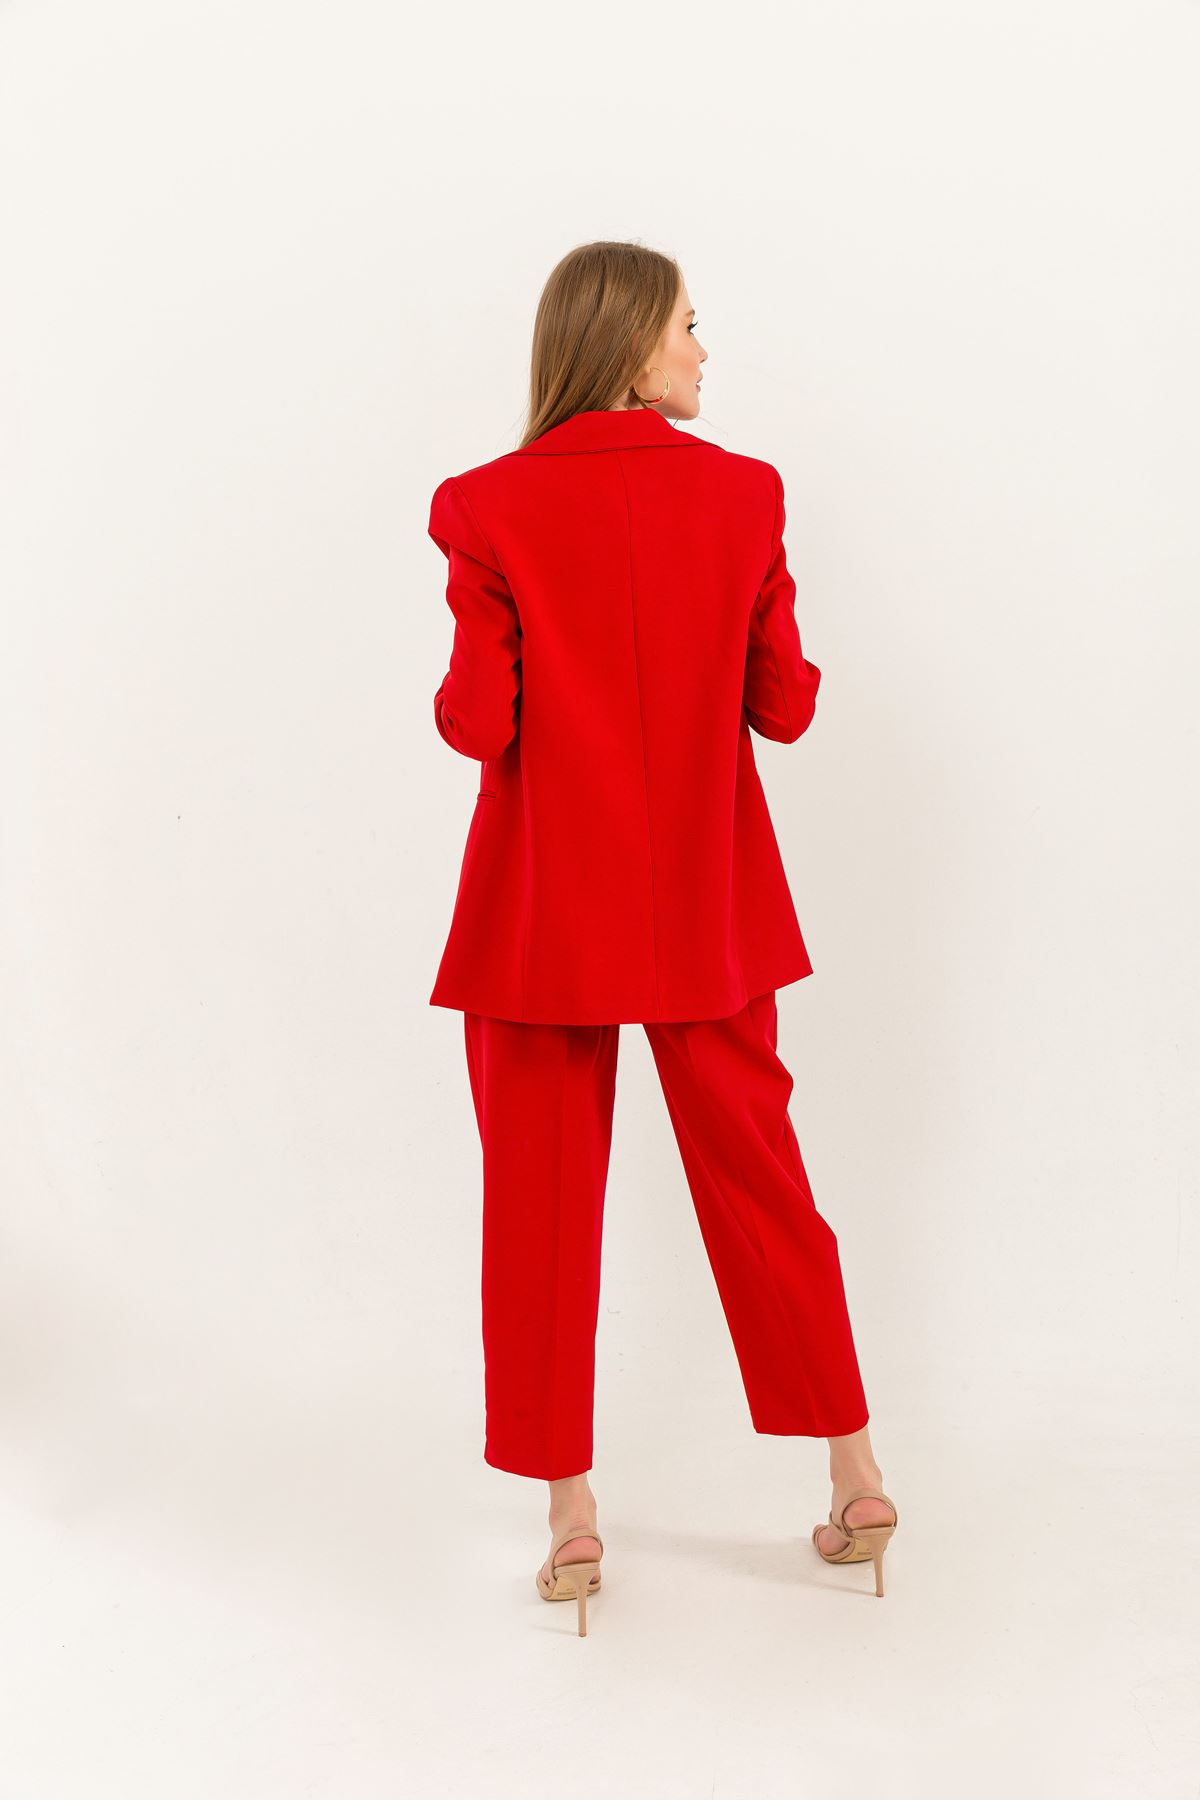 Atlas Fabric Long Sleeve Oversize Women Jacket-Red